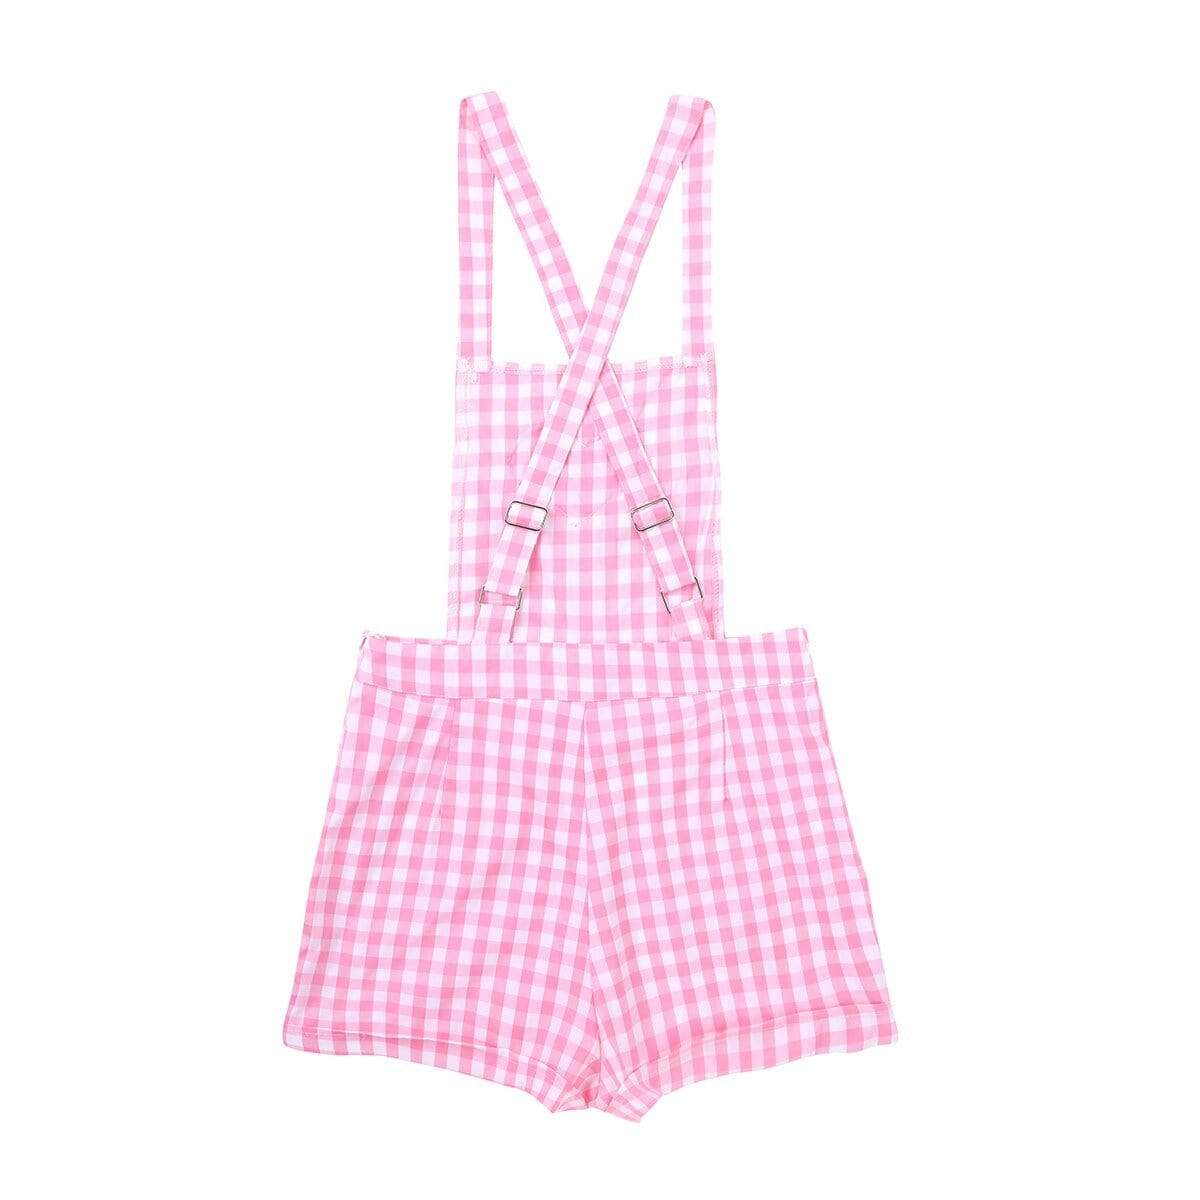 Kinky Cloth Bodysuit Pink Plaid Overalls